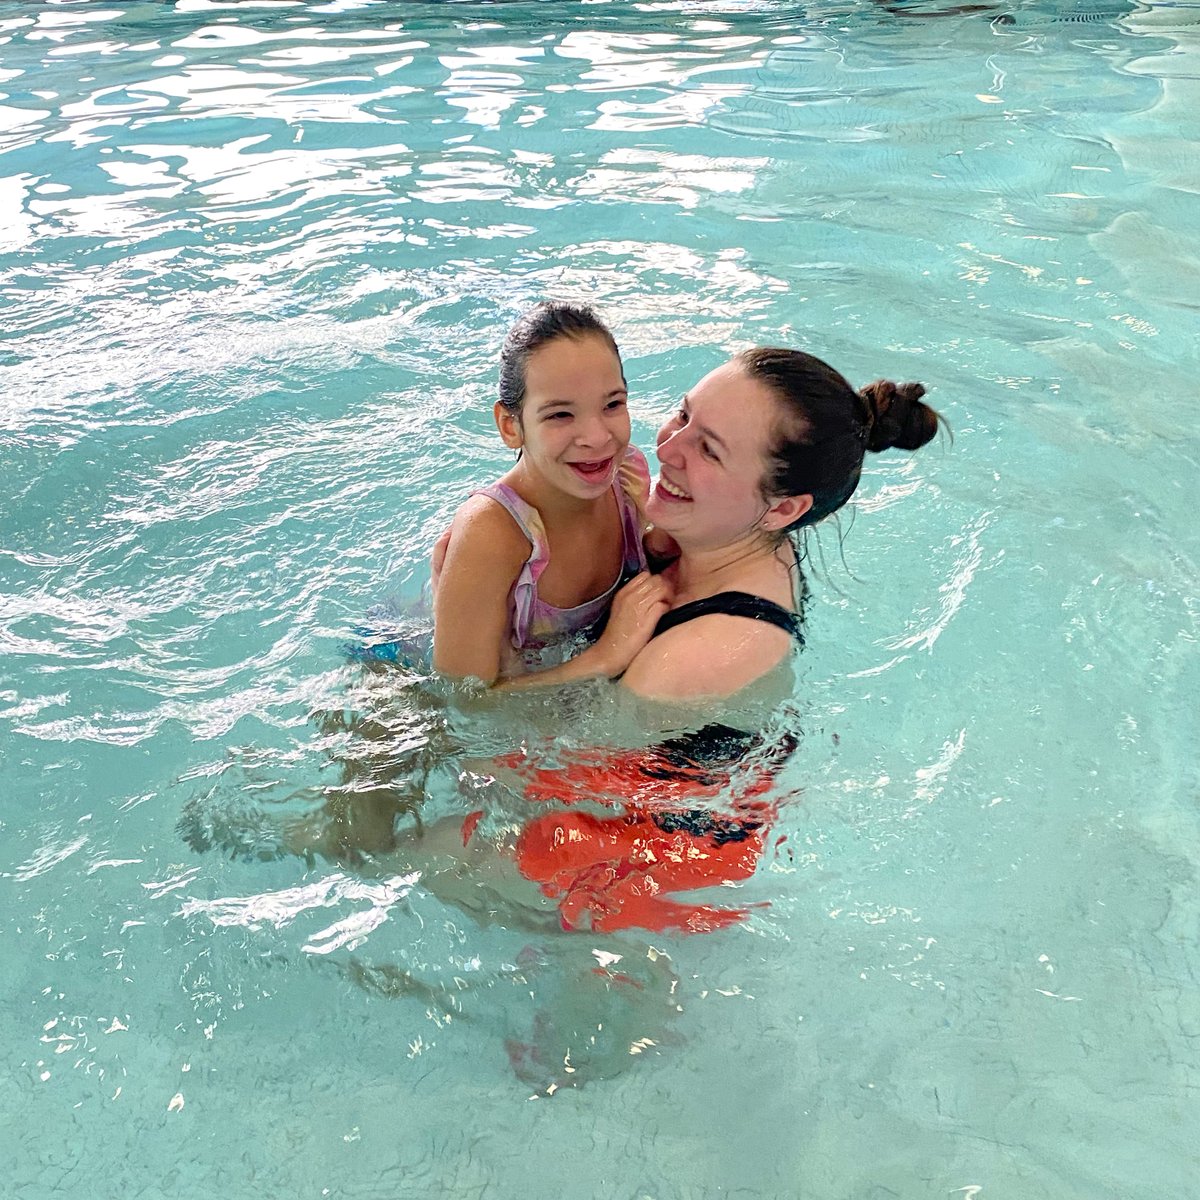 Emmett and Chloe had a blast during their OT session in the pool! 

#iBRAIN #BrainBasedDisorders #BrainInjury #OT #OTGoals #Accessibility #Disability #iBrainAcademy #iBrainInstitute #iBrainCenter #Vision #School #Teacher #Pool #MuscleCoordination #AquaticTherapy